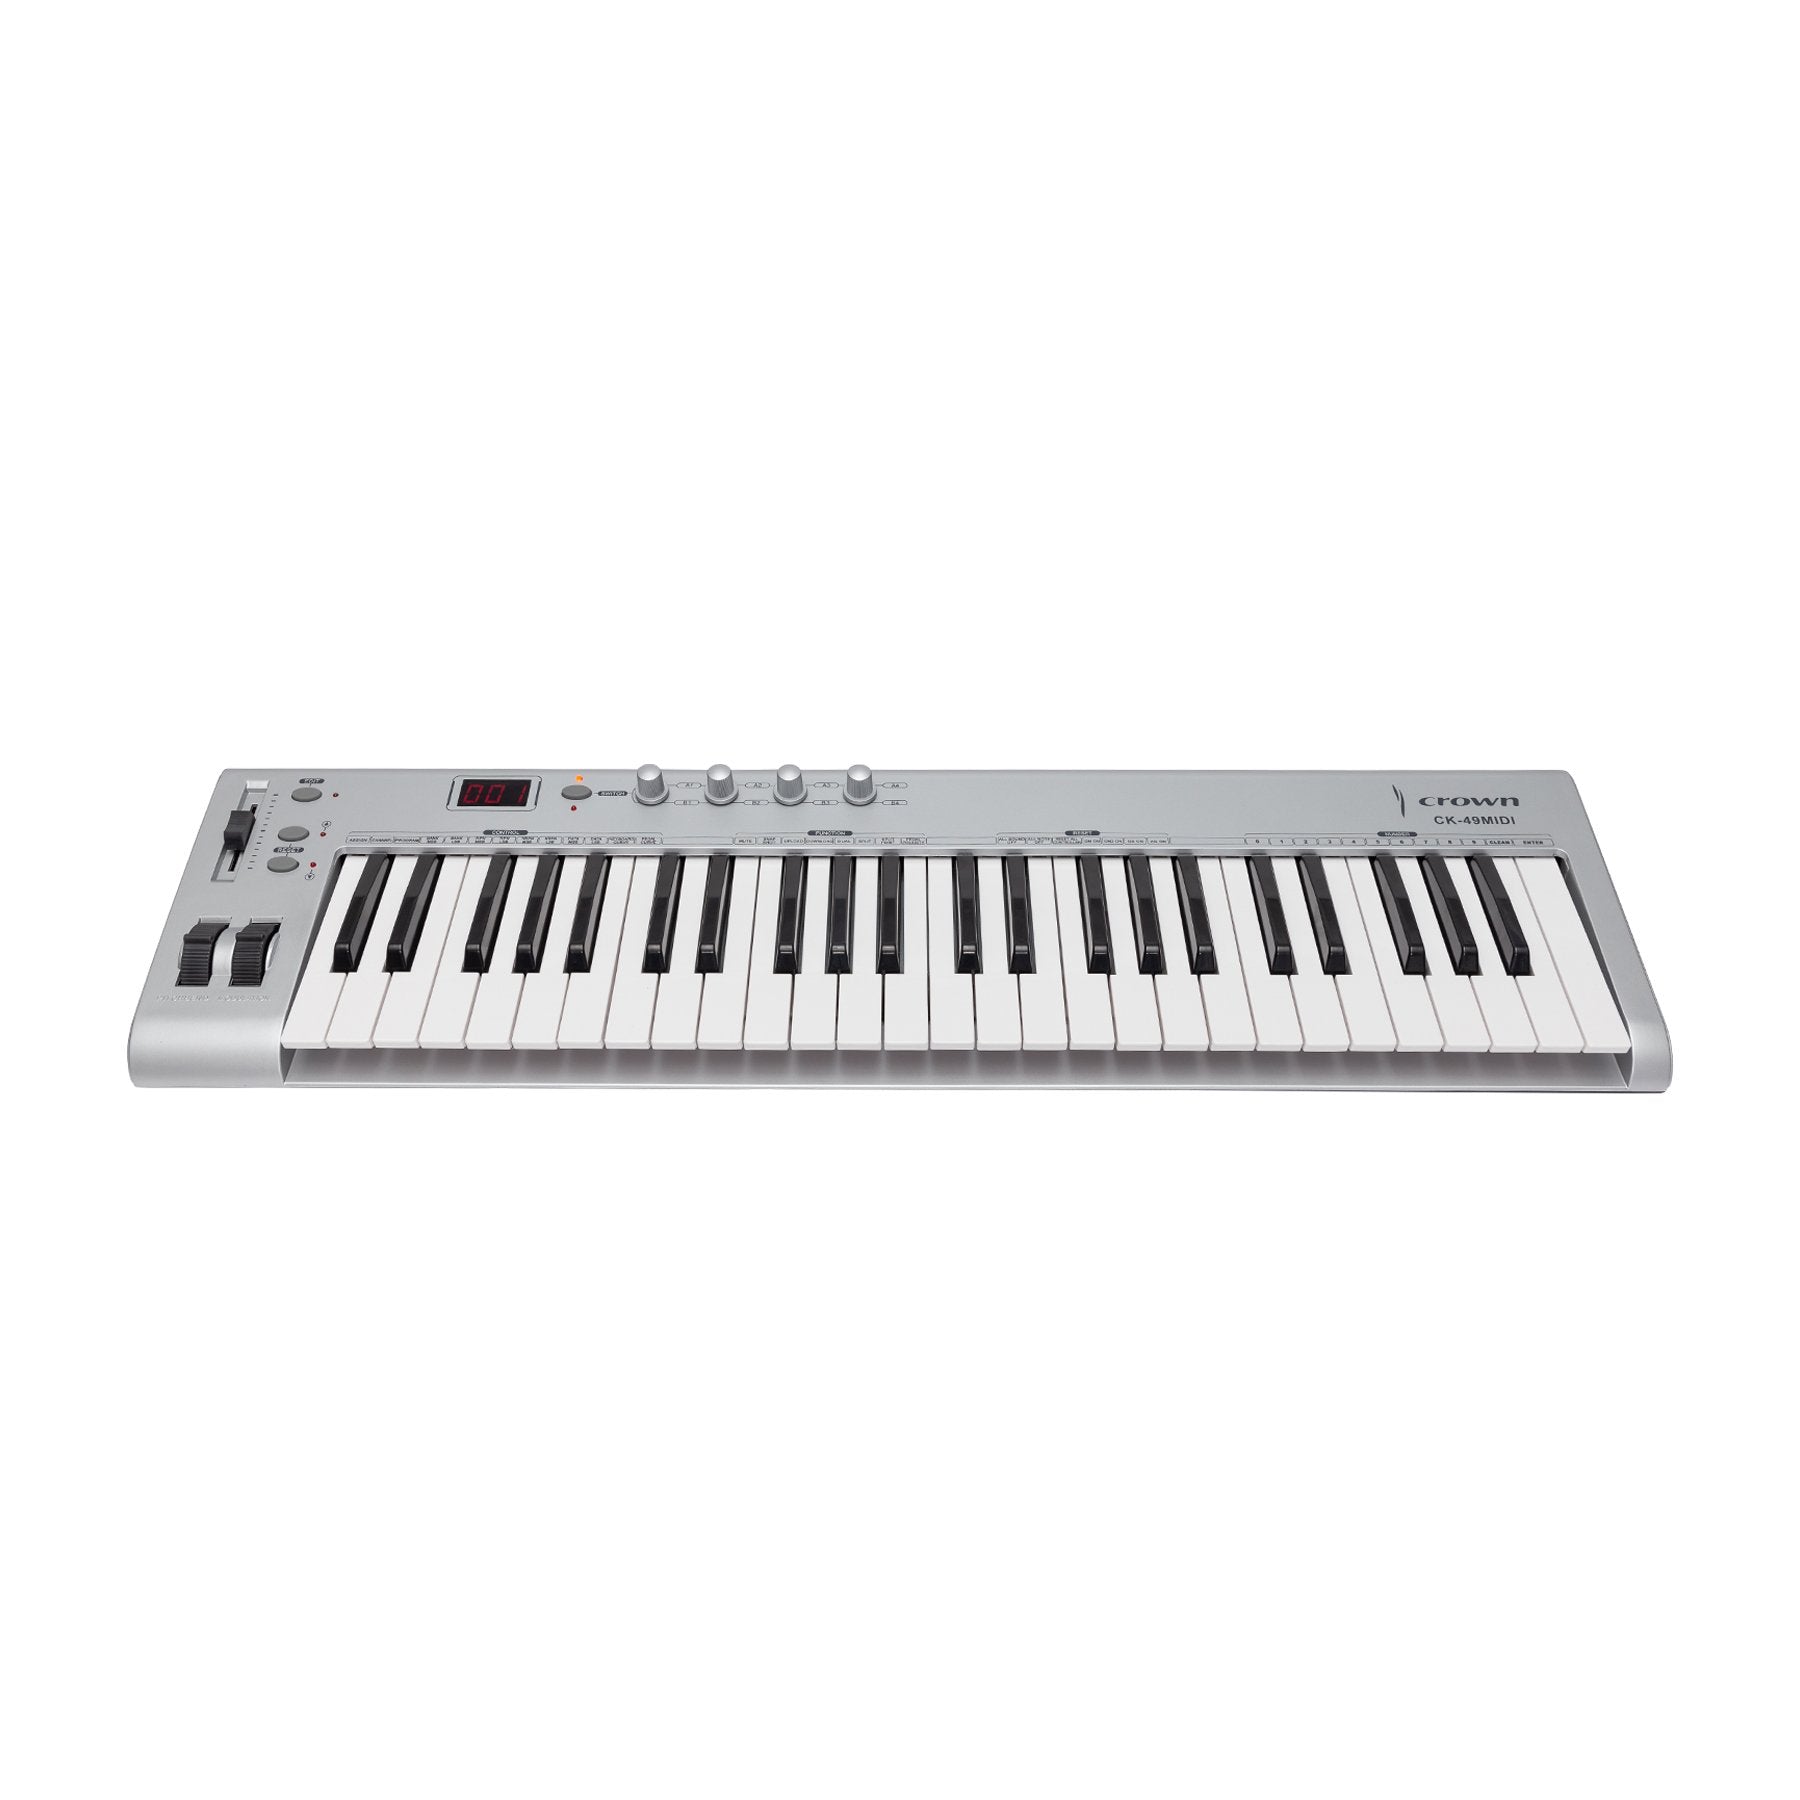 Crown CK-49 MIDI USB 49-Key Electronic Portable Keyboard Controller (Silver)-CK-49MIDI-SLV